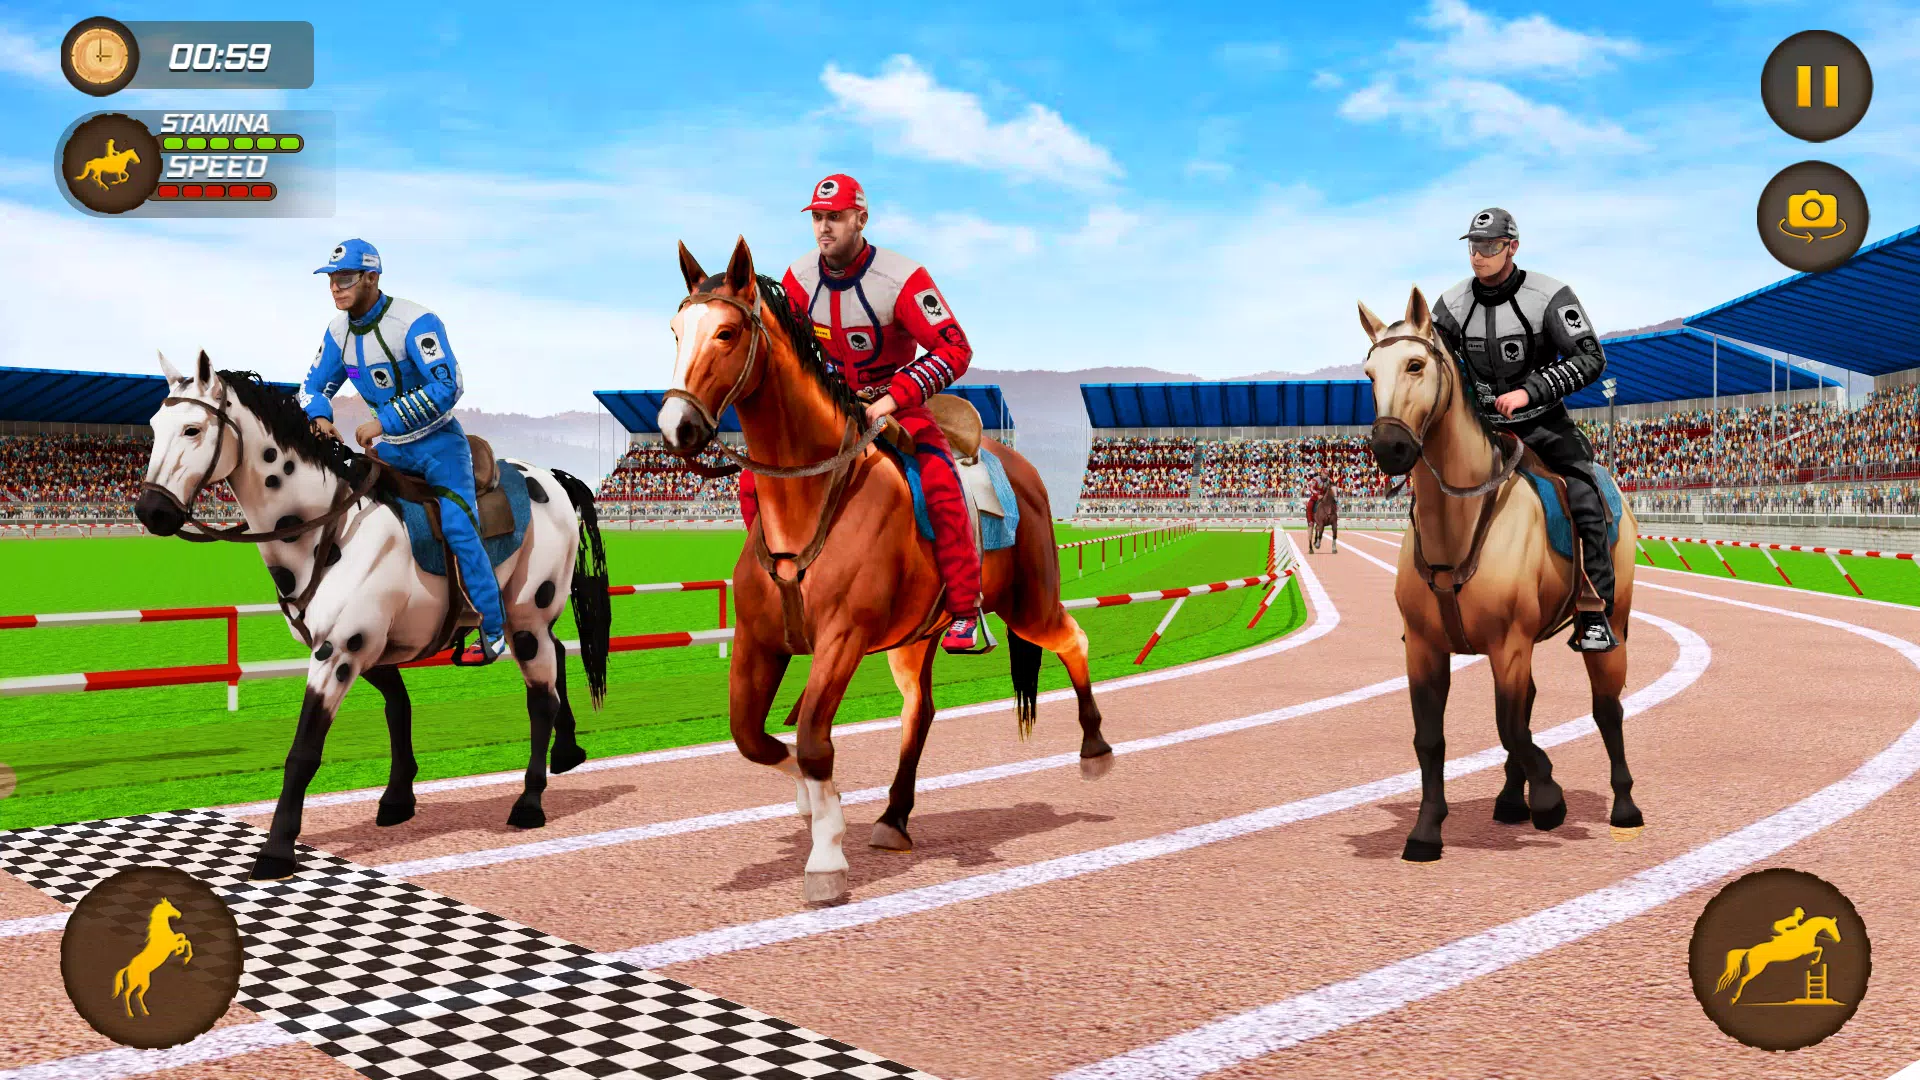 Jogo Corrida de Cavalos 2d online. Jogar gratis